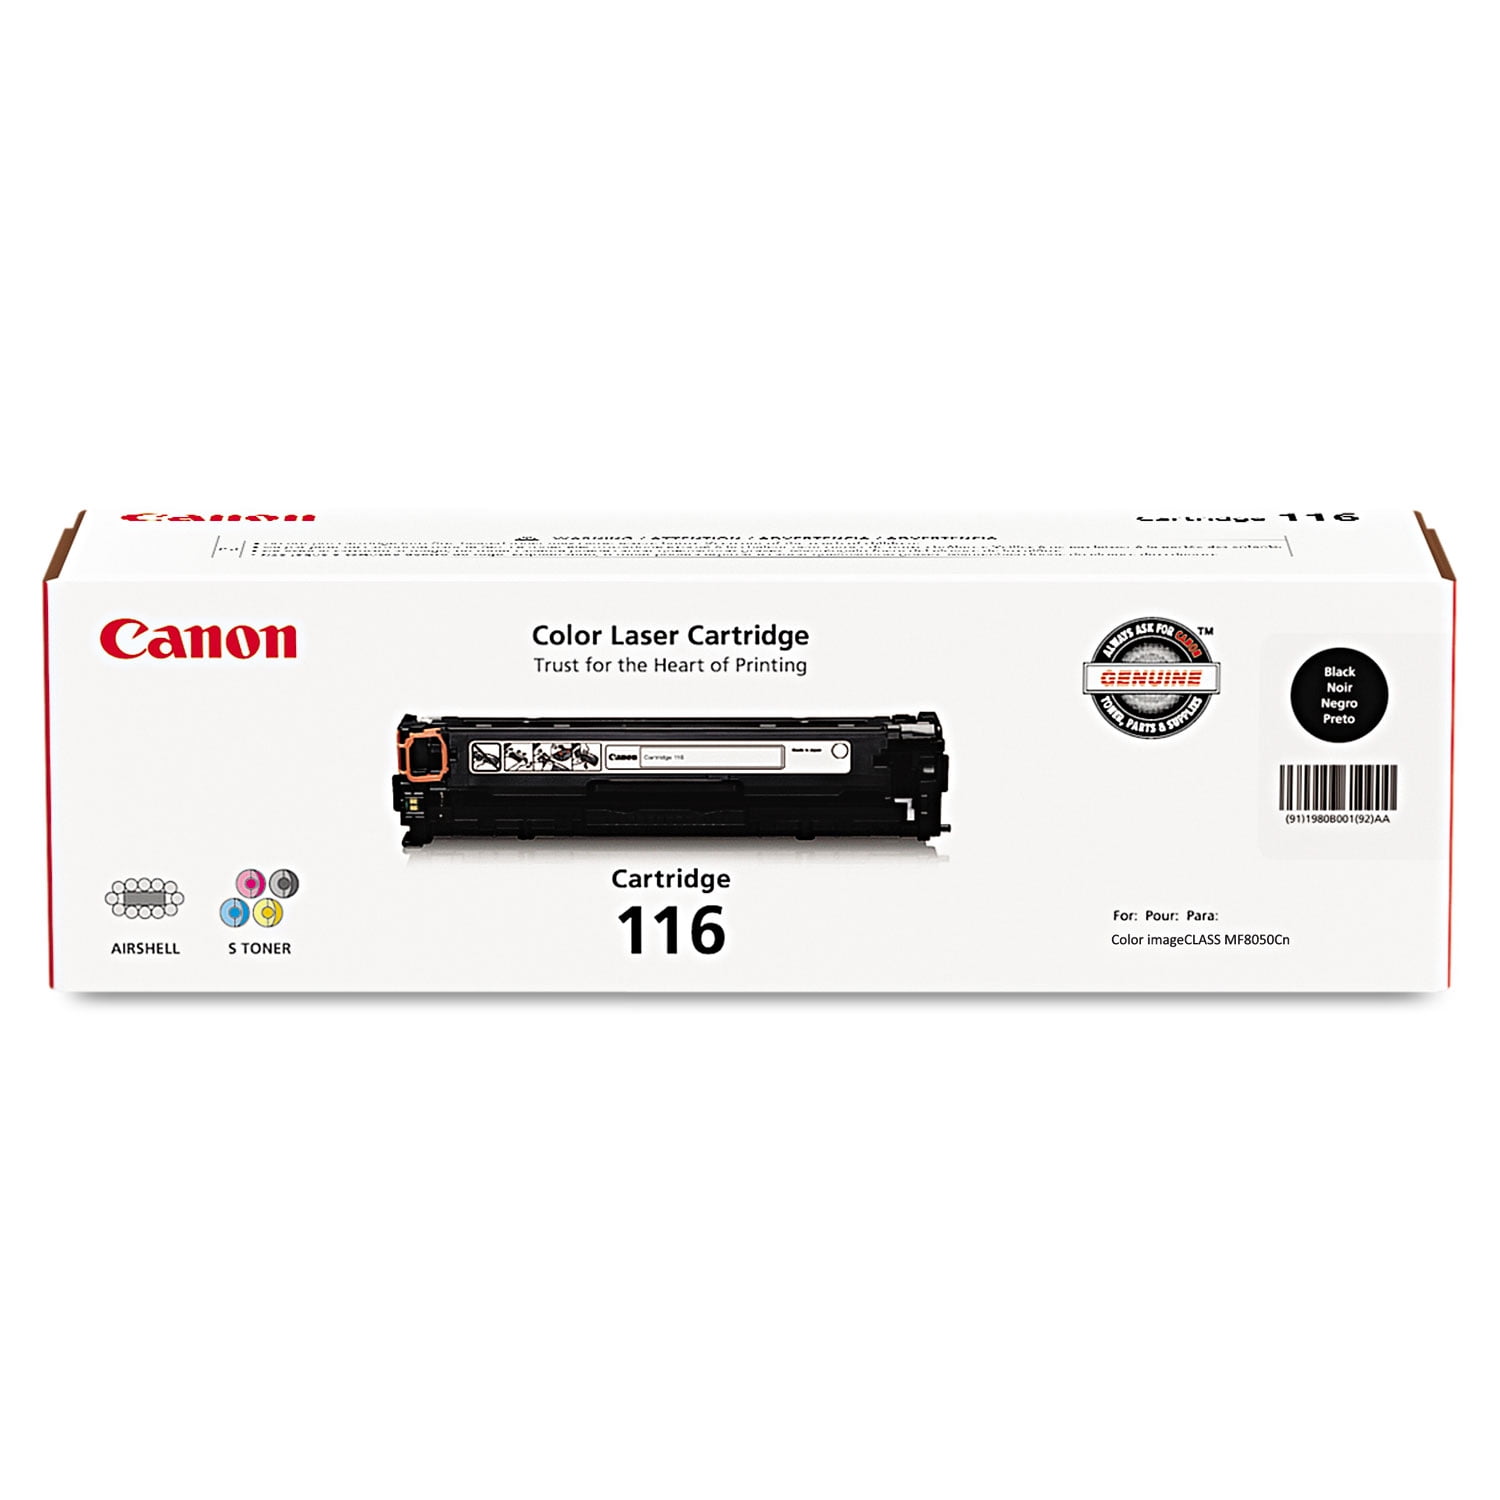 Walmart.com for sale online Canon E20 Toner Cartridge 1492a002aa 